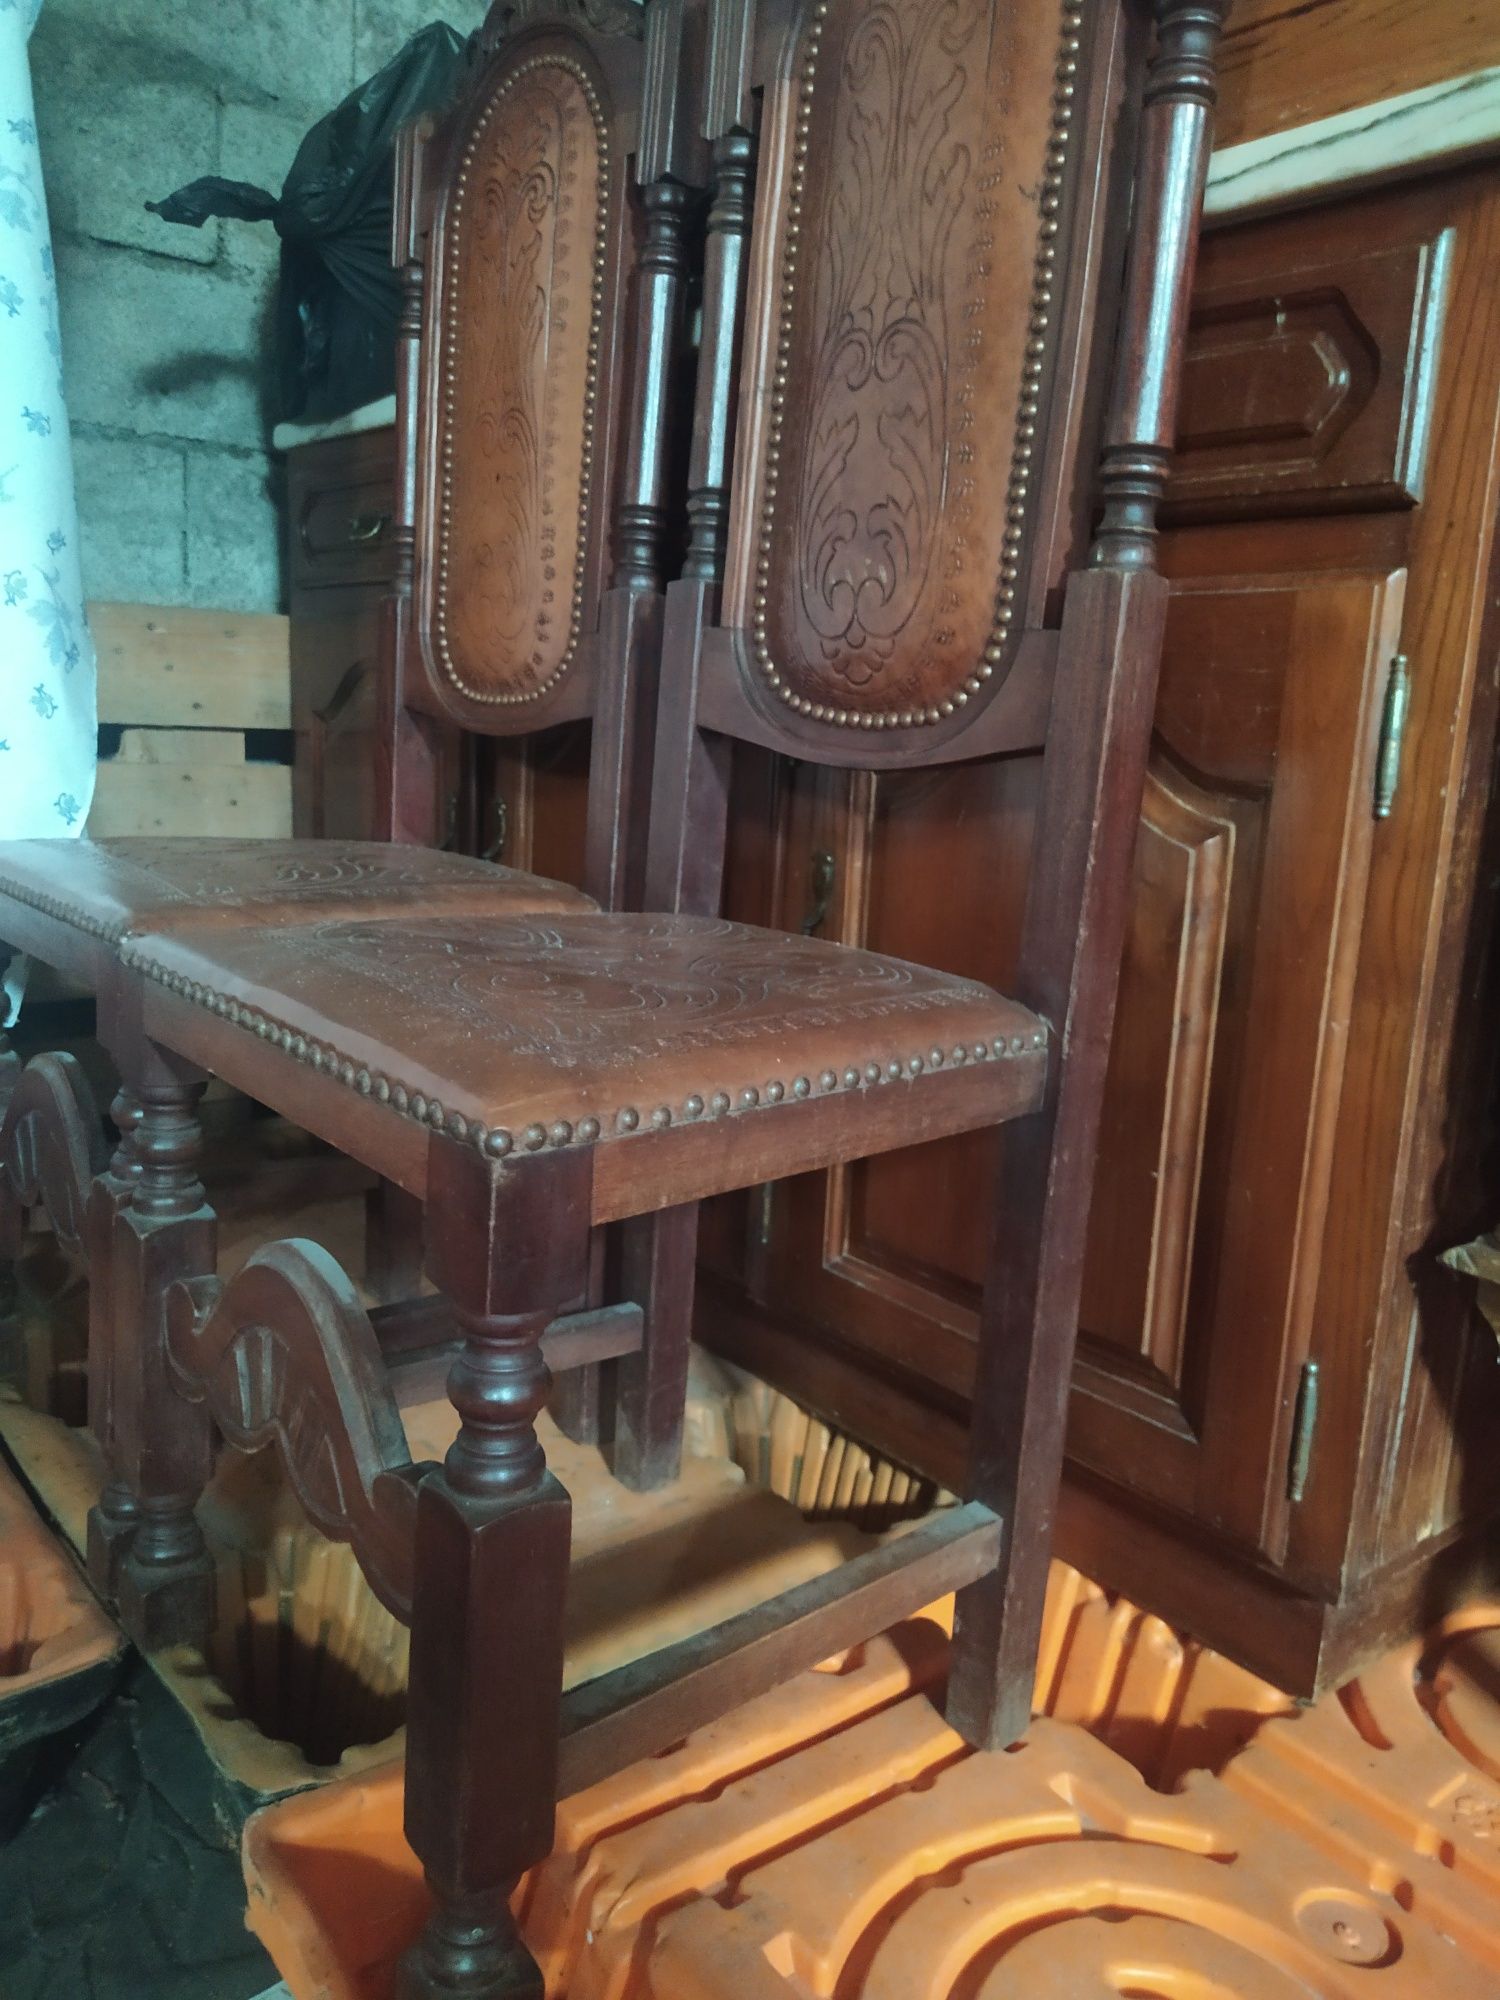 Cadeiras antigas